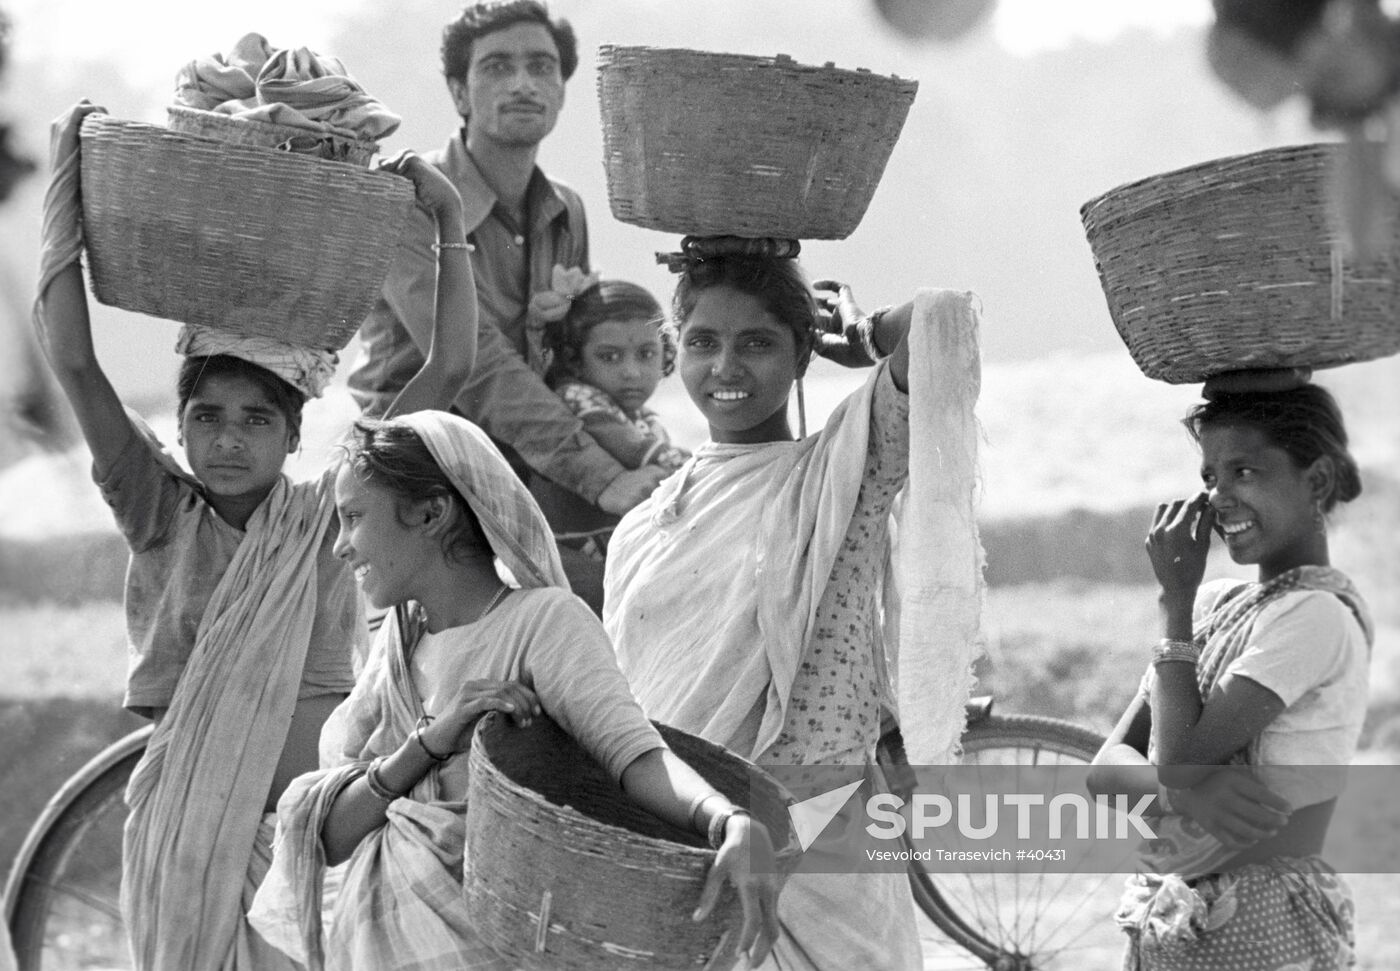 INDIA FARMERS GIRLS BASKETS